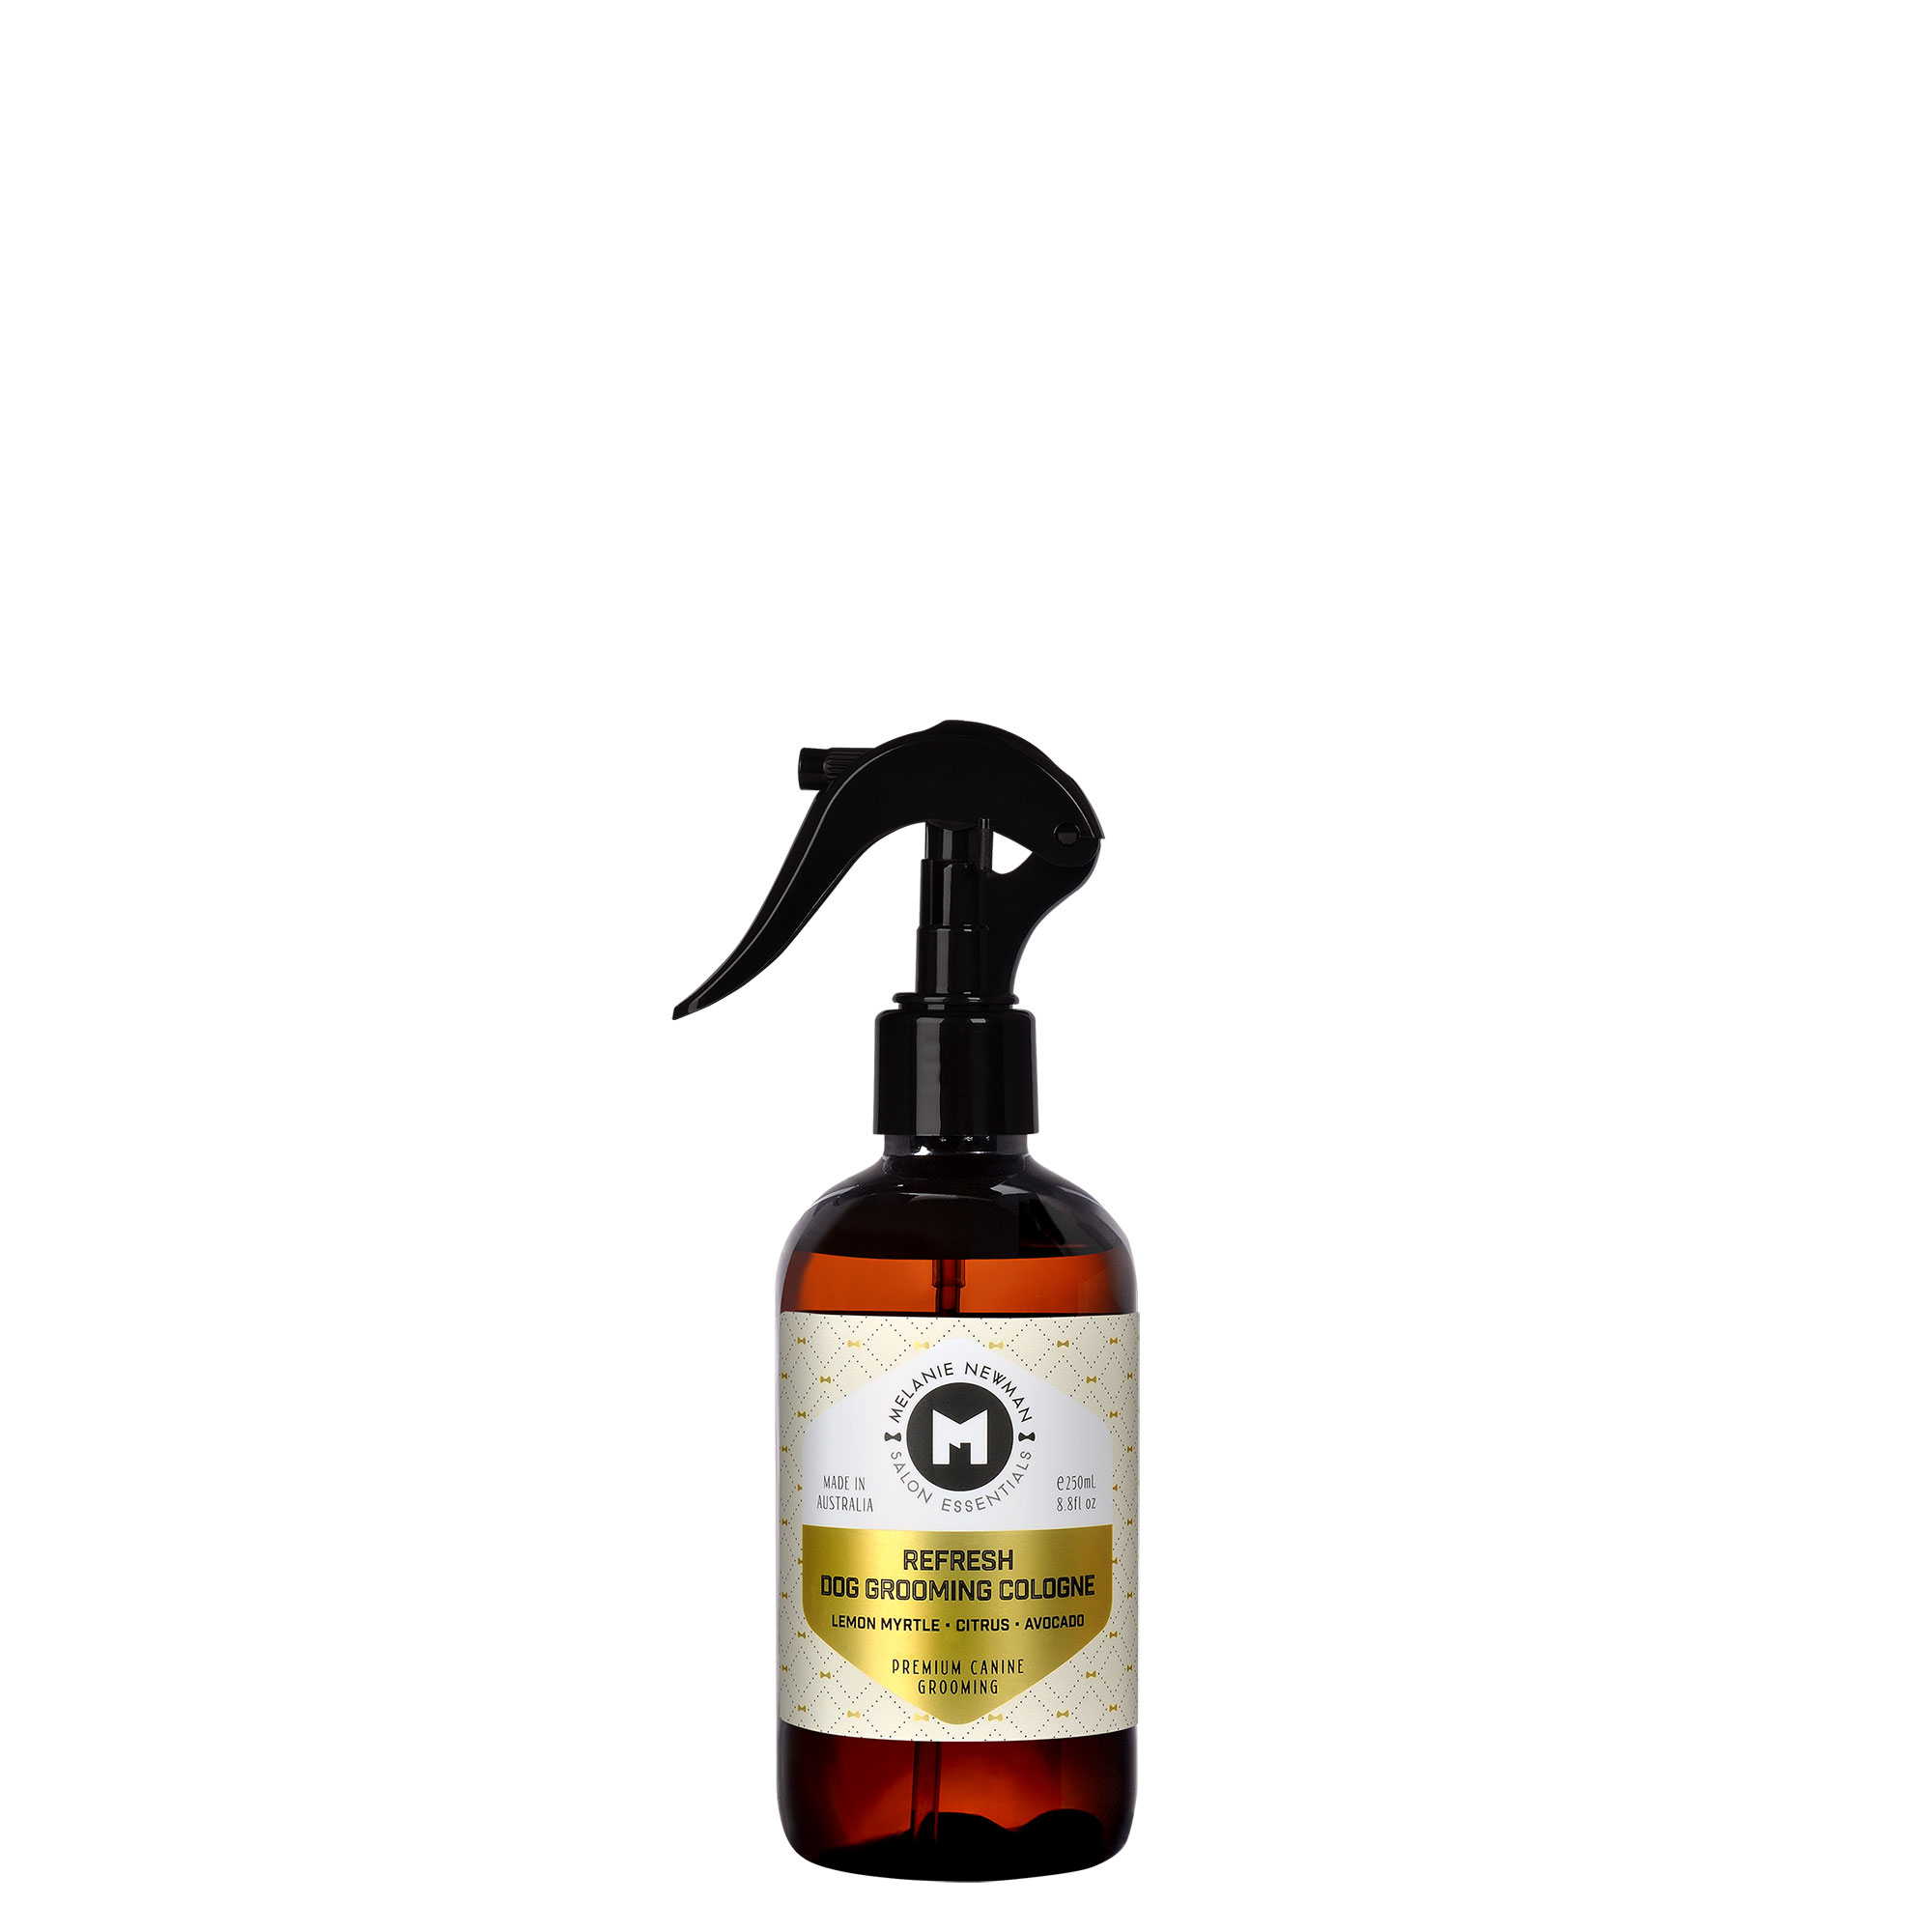 OPOVE Rust Prevention Premium Hair Clipper Oil, 4.05 Ounces